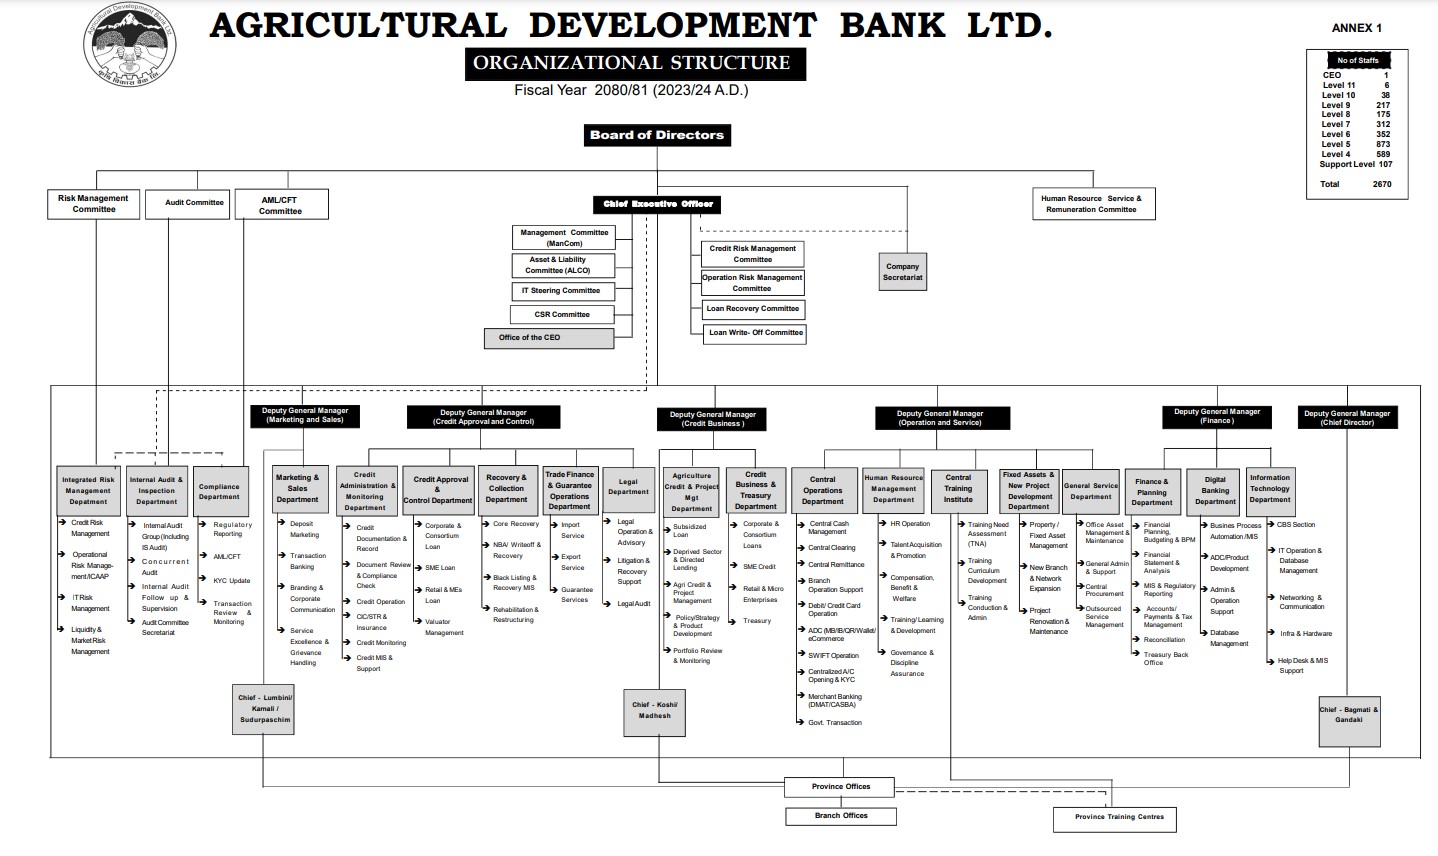 Organizational structure of ADBL